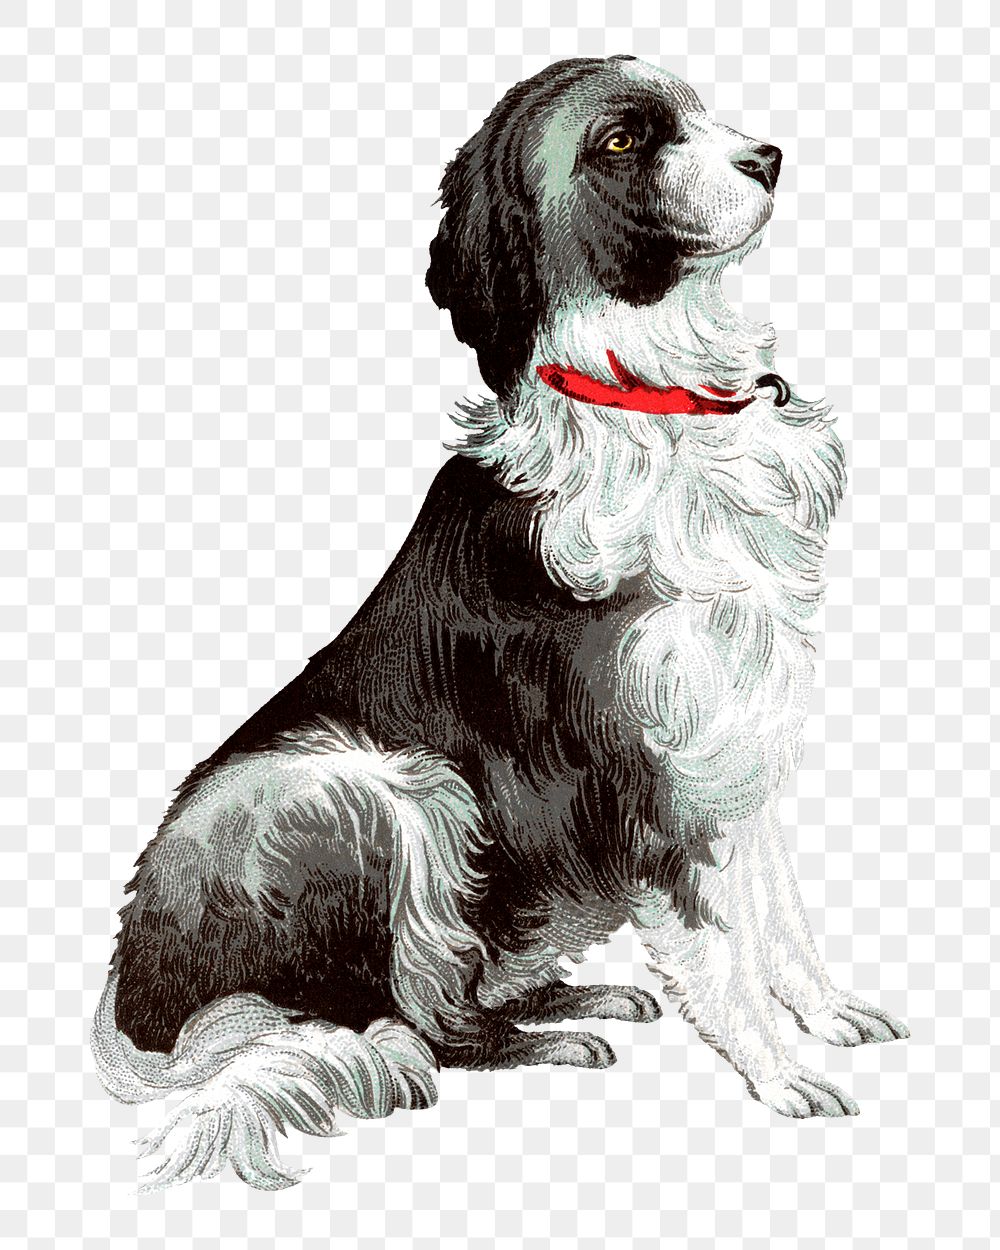 Vintage dog png English Springer Spaniel, transparent background. Remixed by rawpixel.